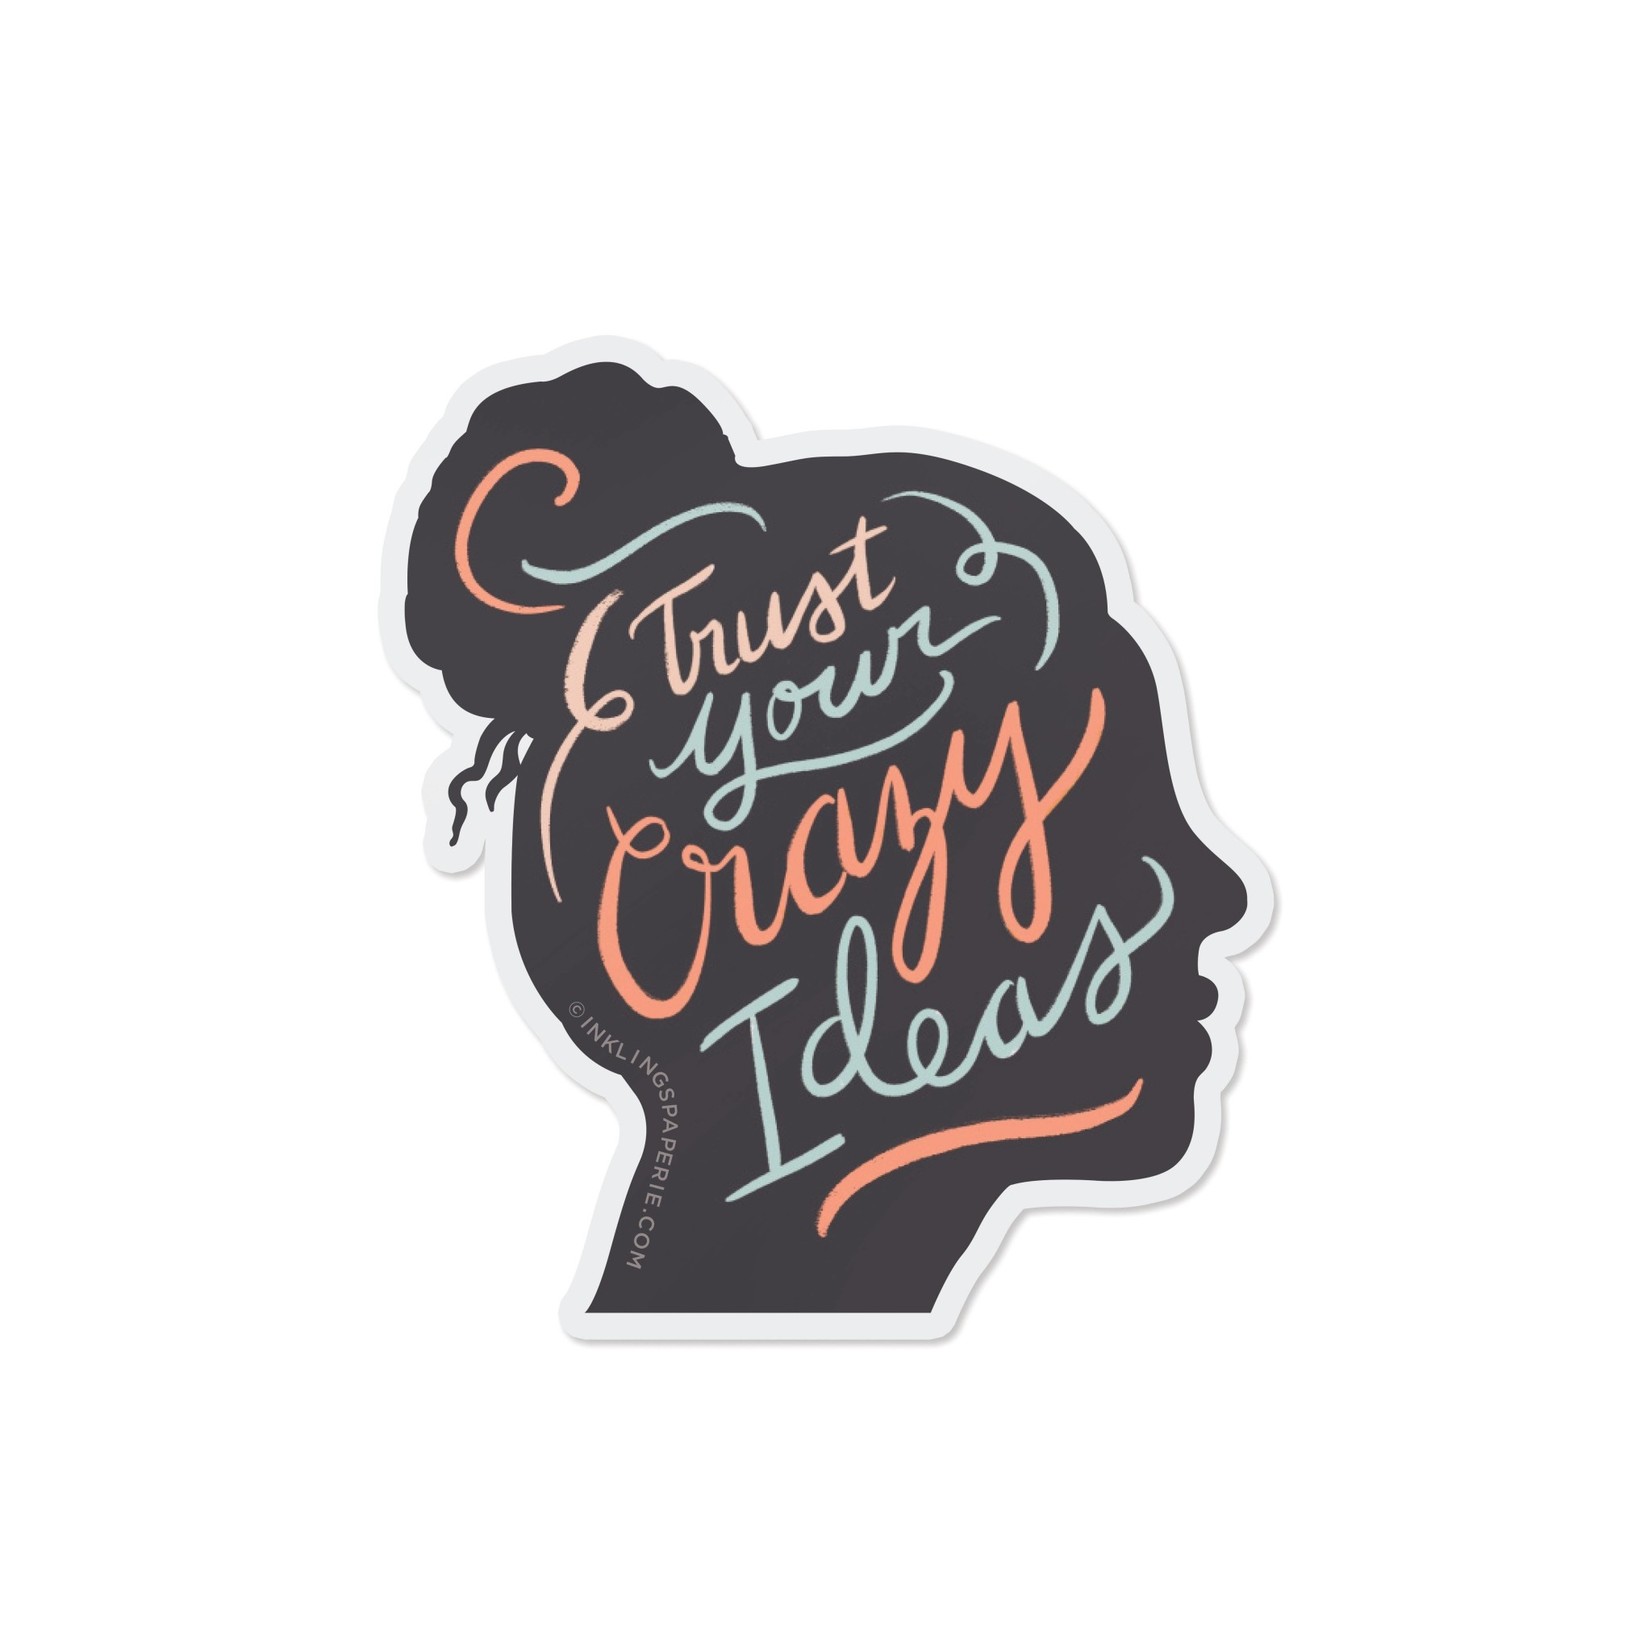 Trust Your Crazy Ideas Sticker